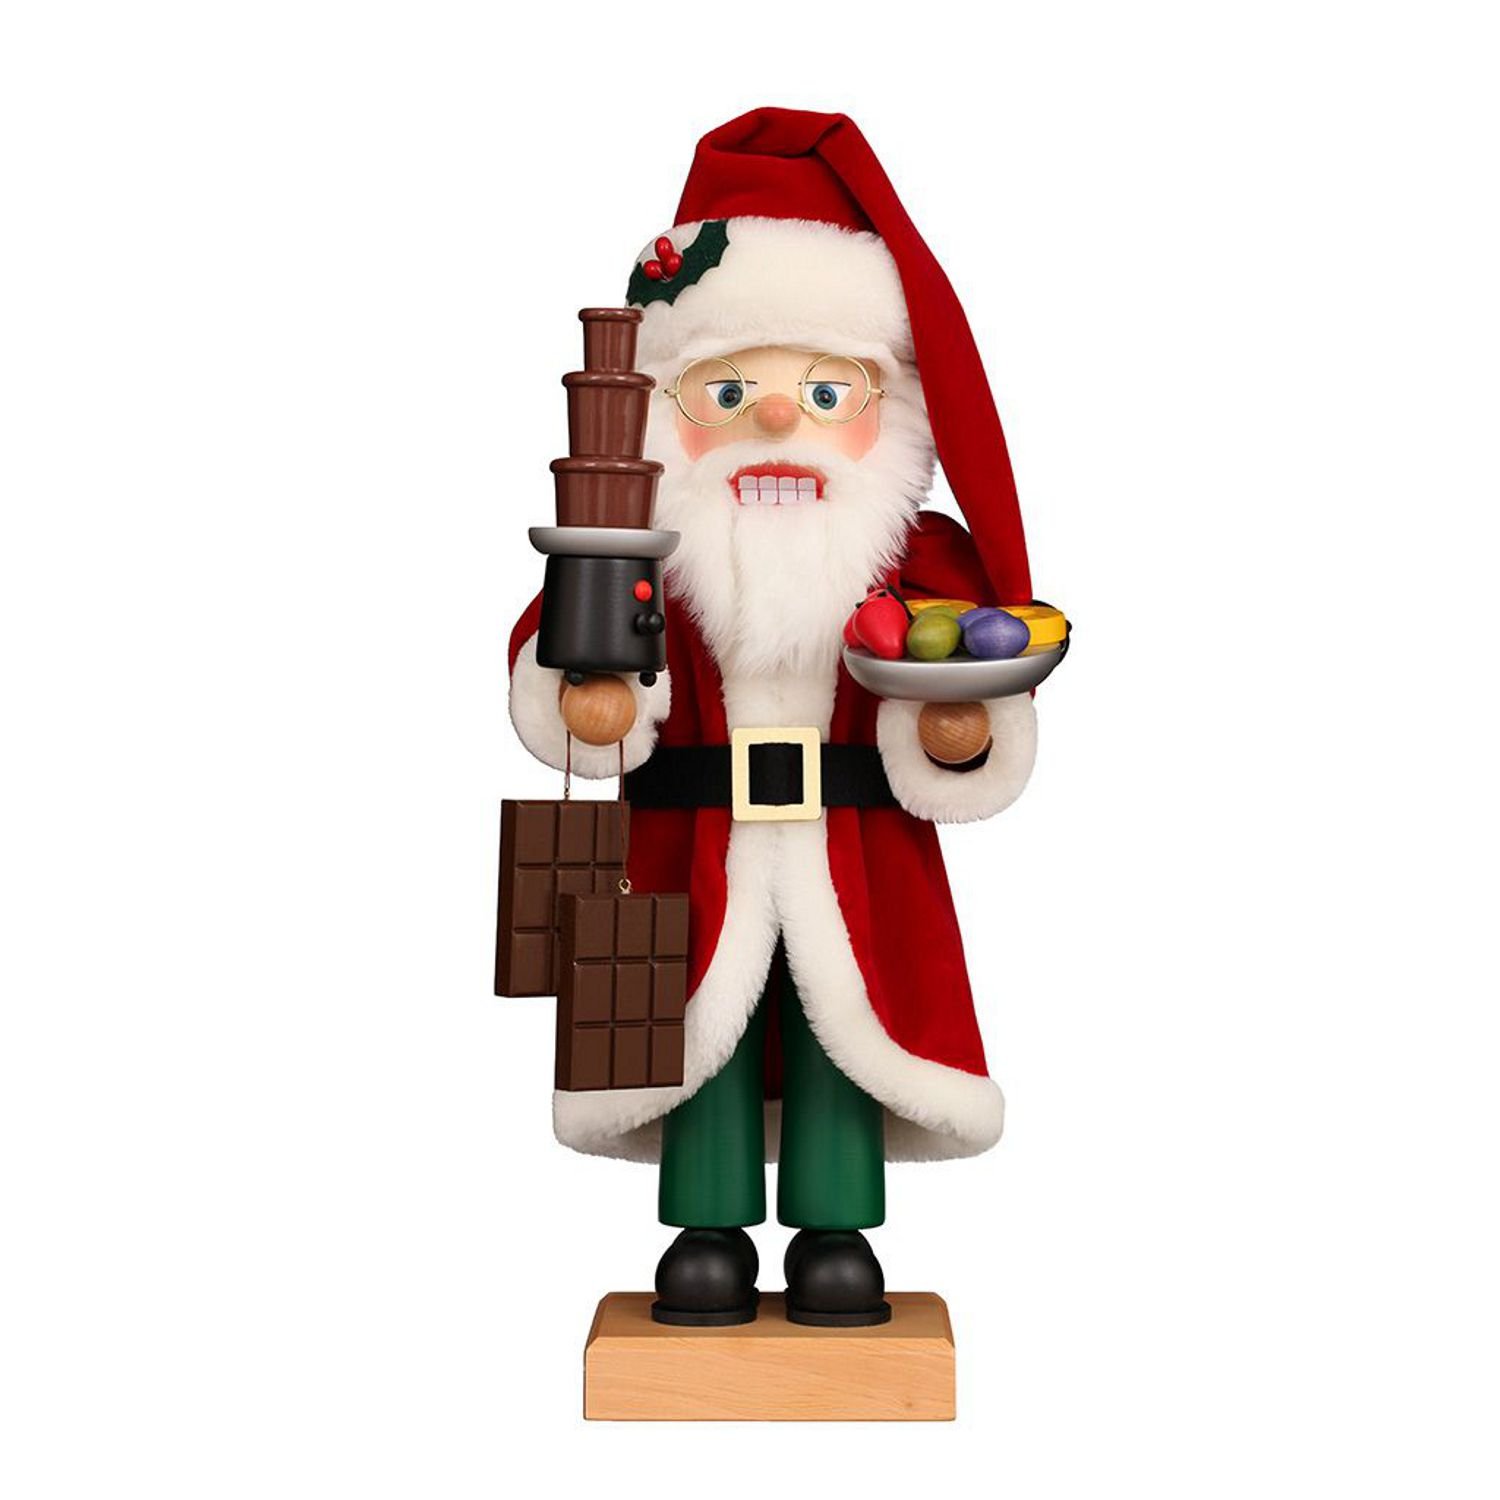 Nutcracker Santa Claus with chocolate fountain